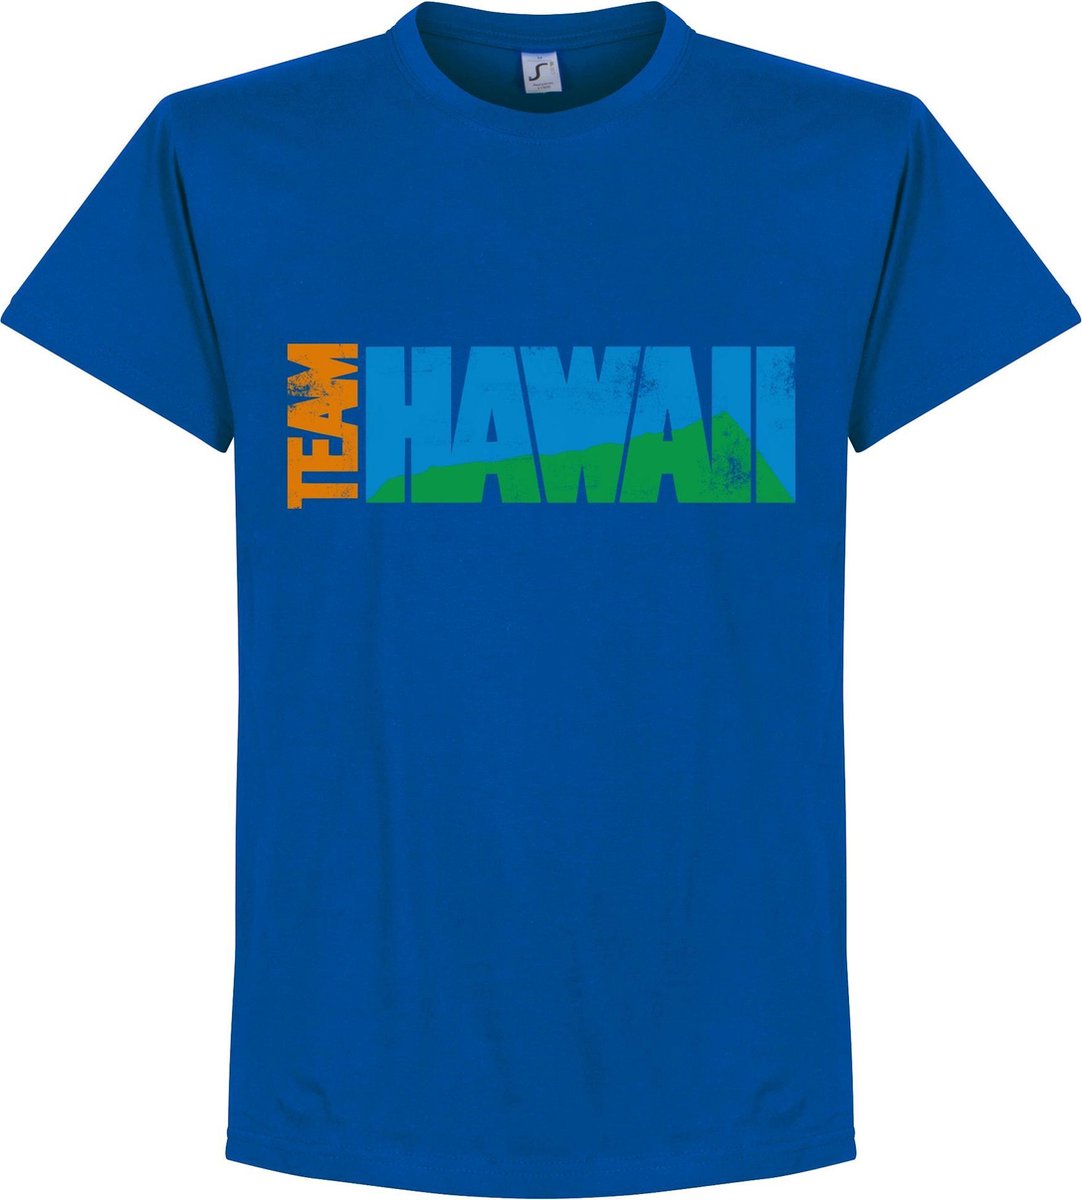 Team Hawaii T-Shirt - Blauw - XXXXL